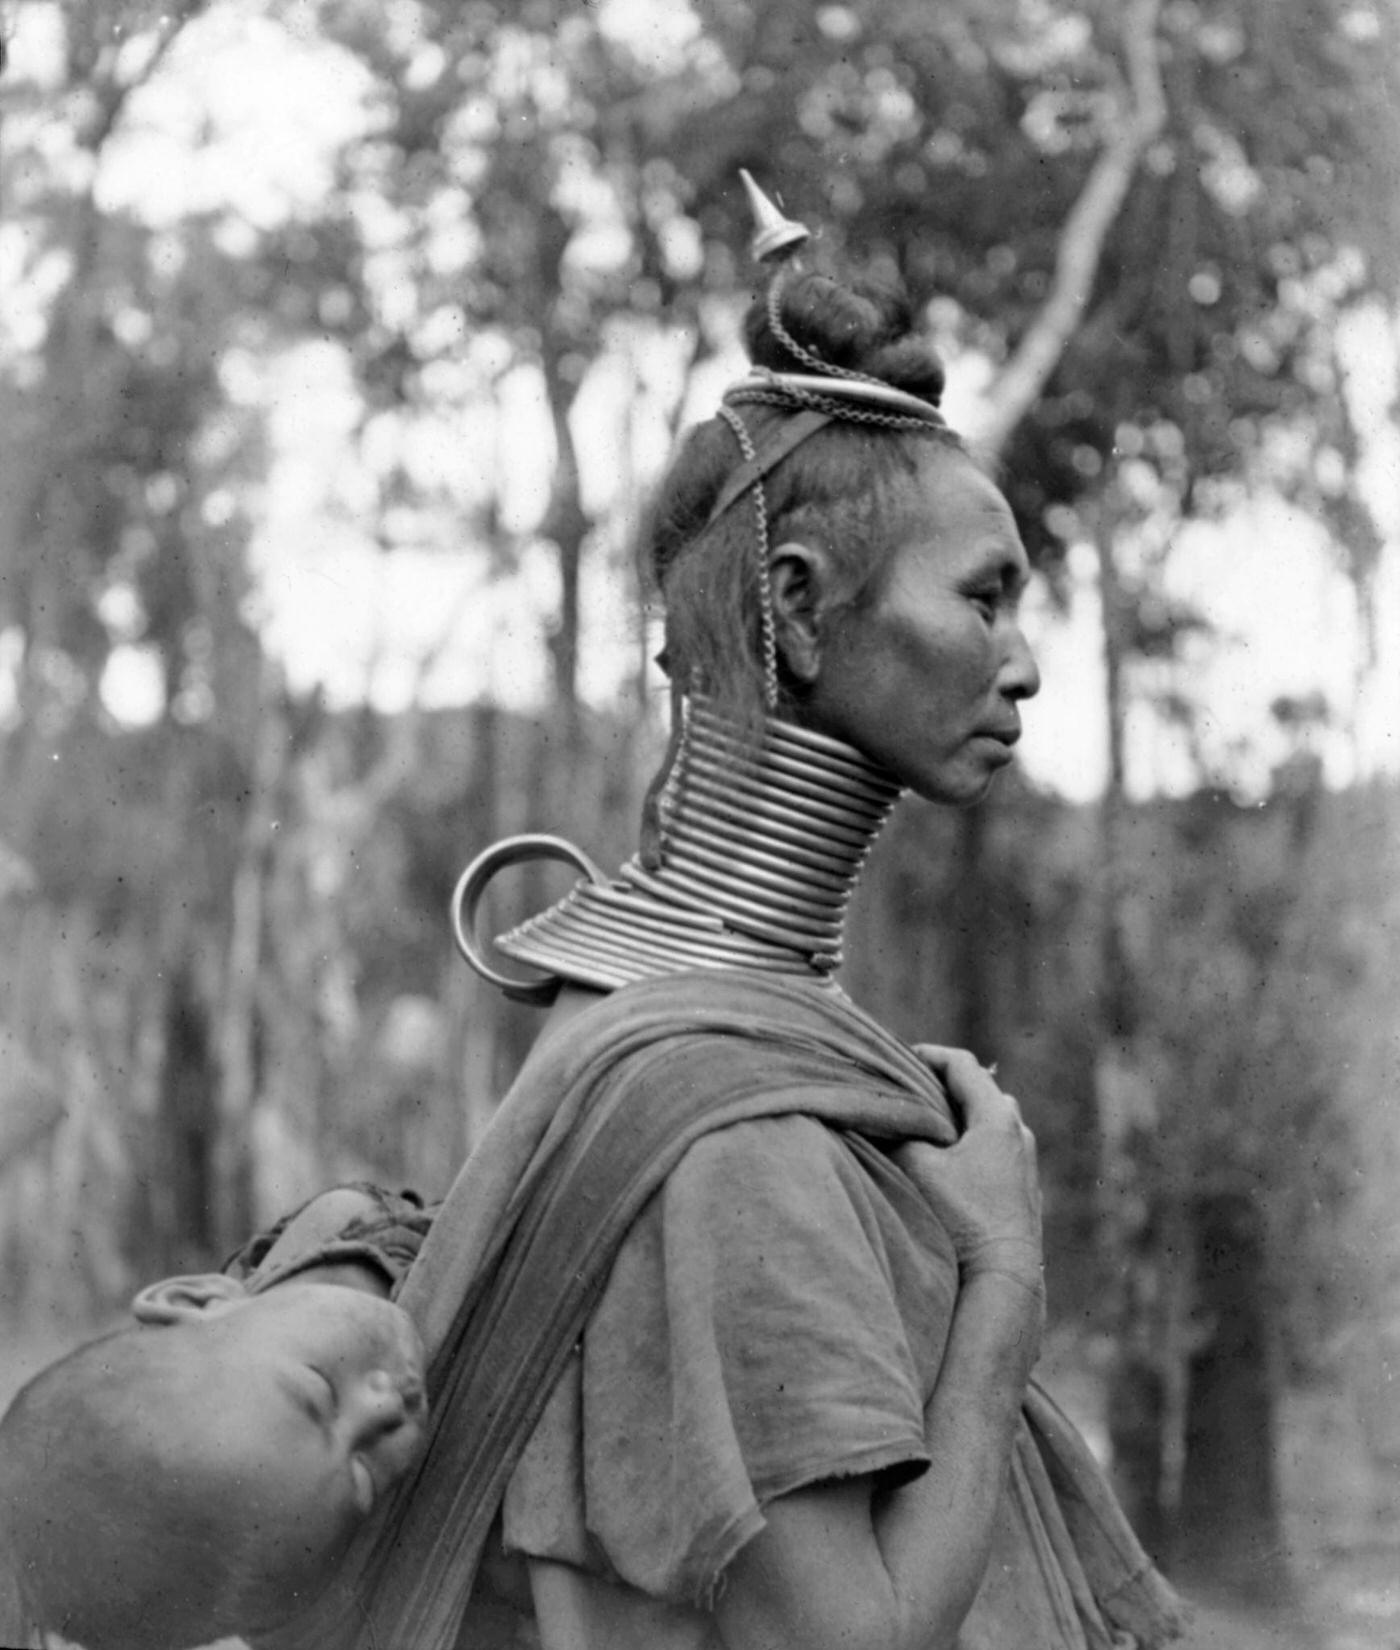 Padaung woman and child, Mong Pai State, Burma, 1919.